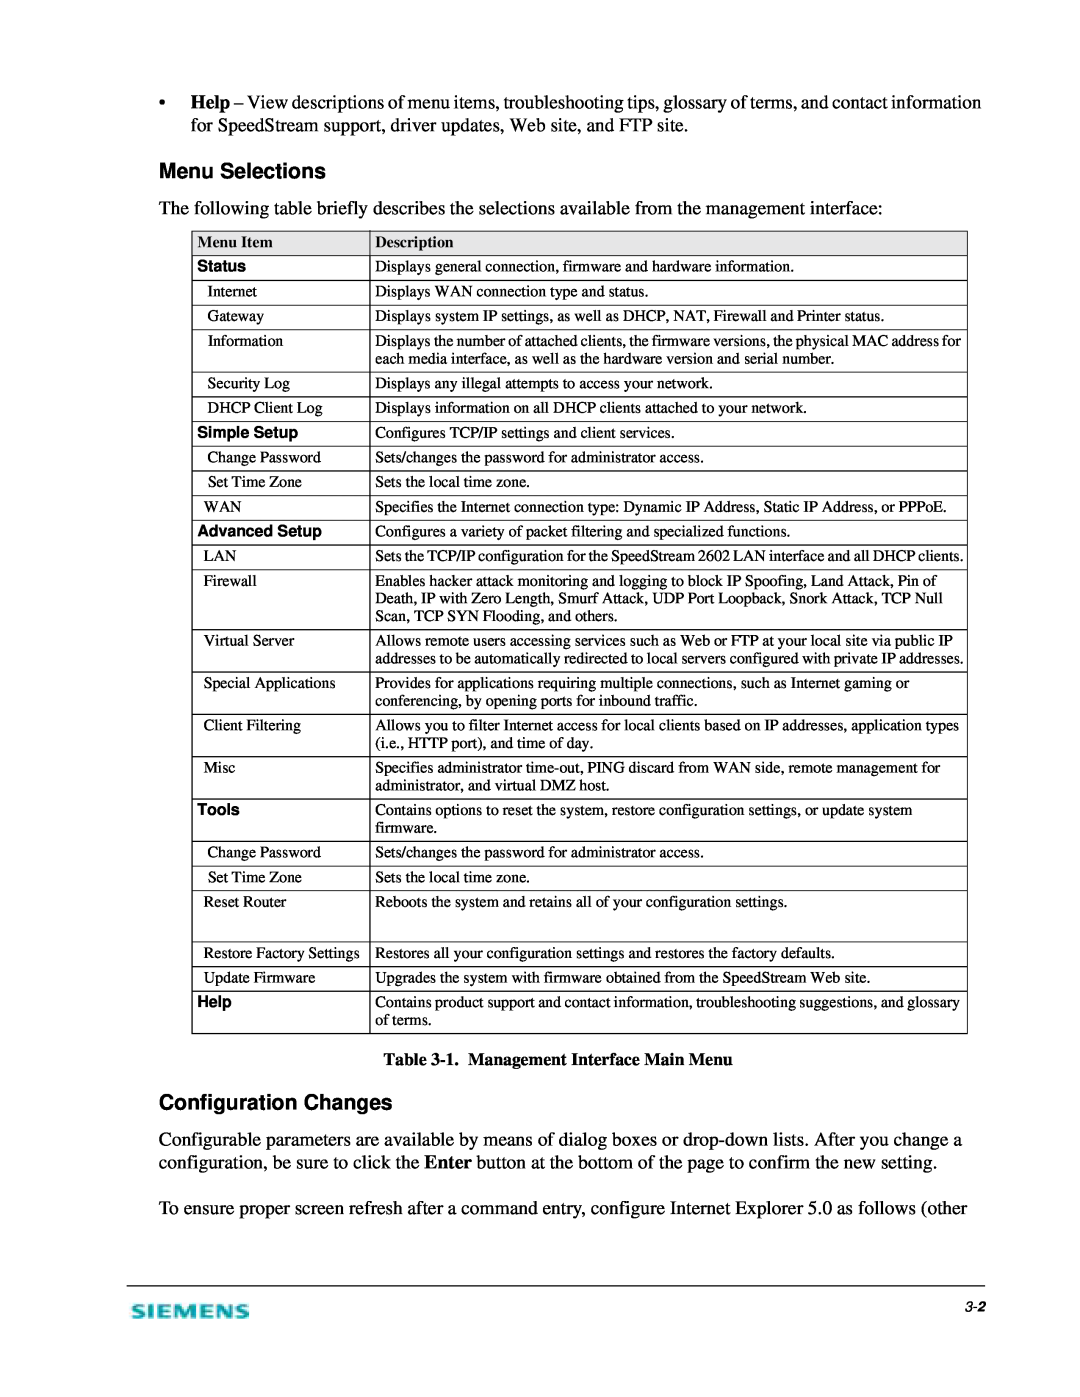 Siemens 2602 manual Menu Selections, Configuration Changes, 1. Management Interface Main Menu 